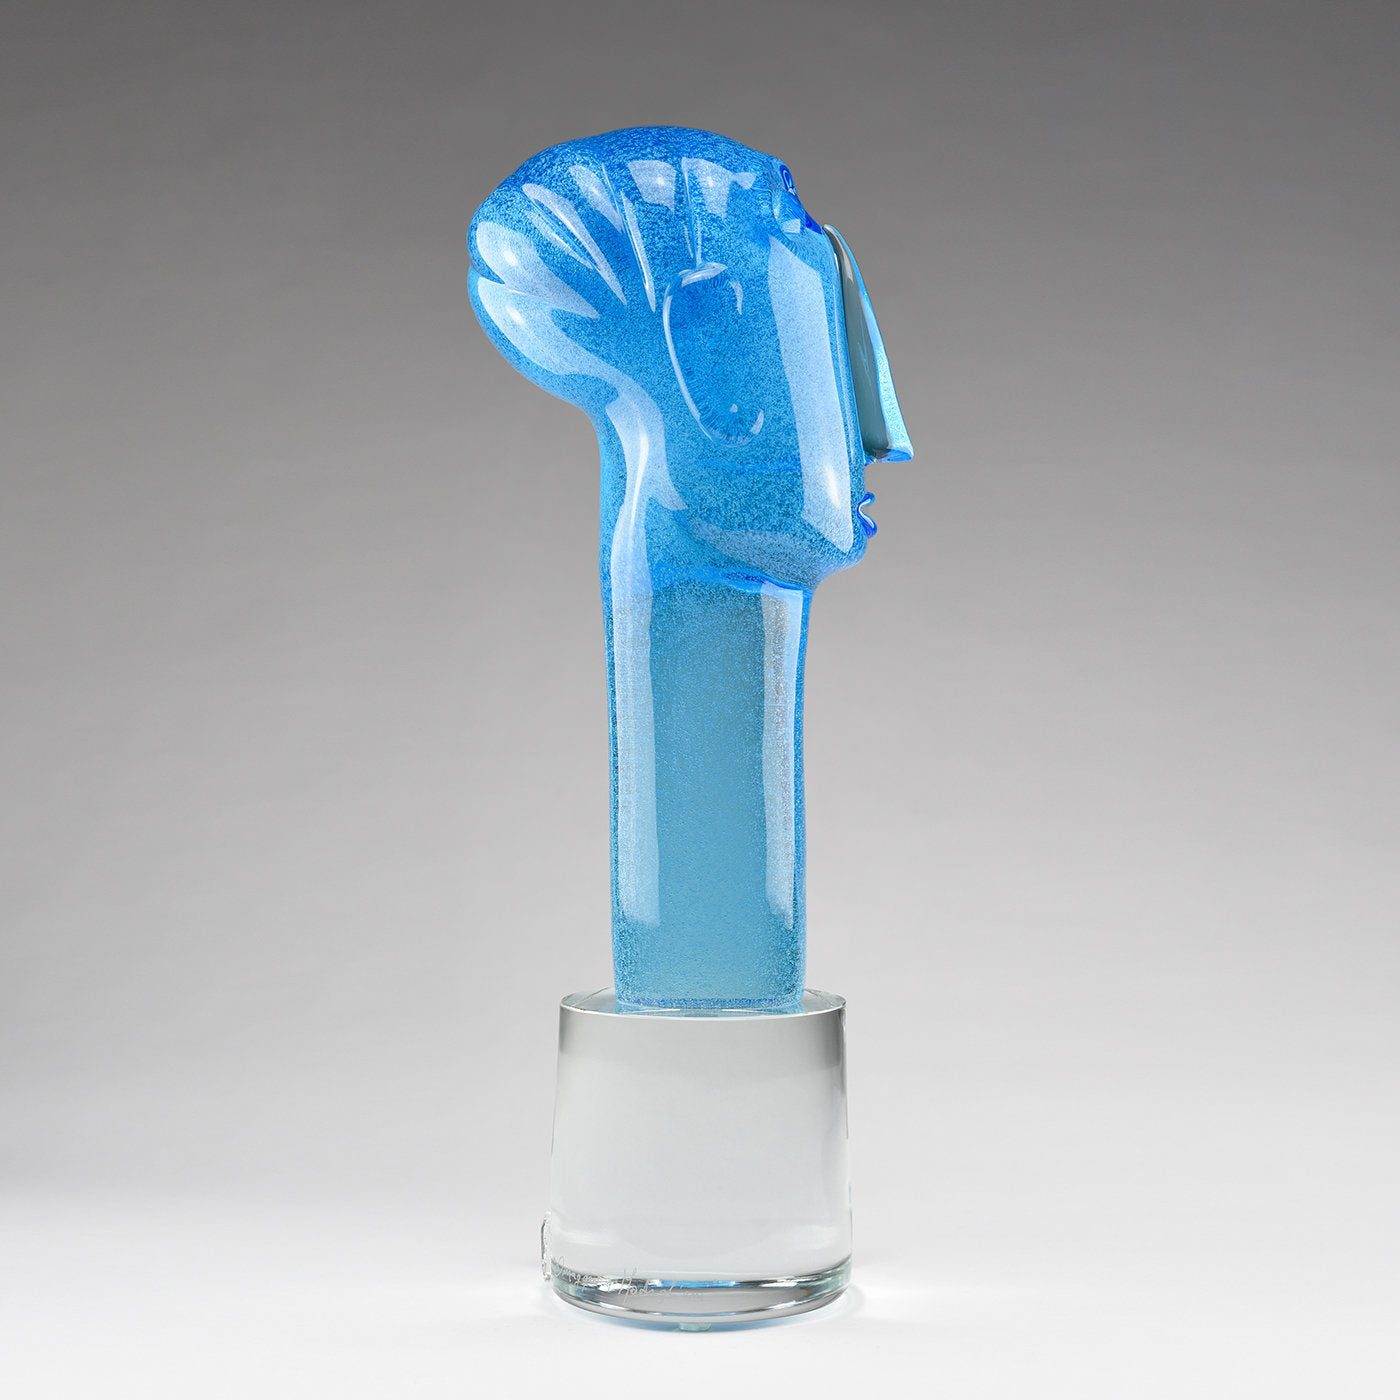 Volto Ovale Light-Blue Glass Sculpture - Alternative view 2